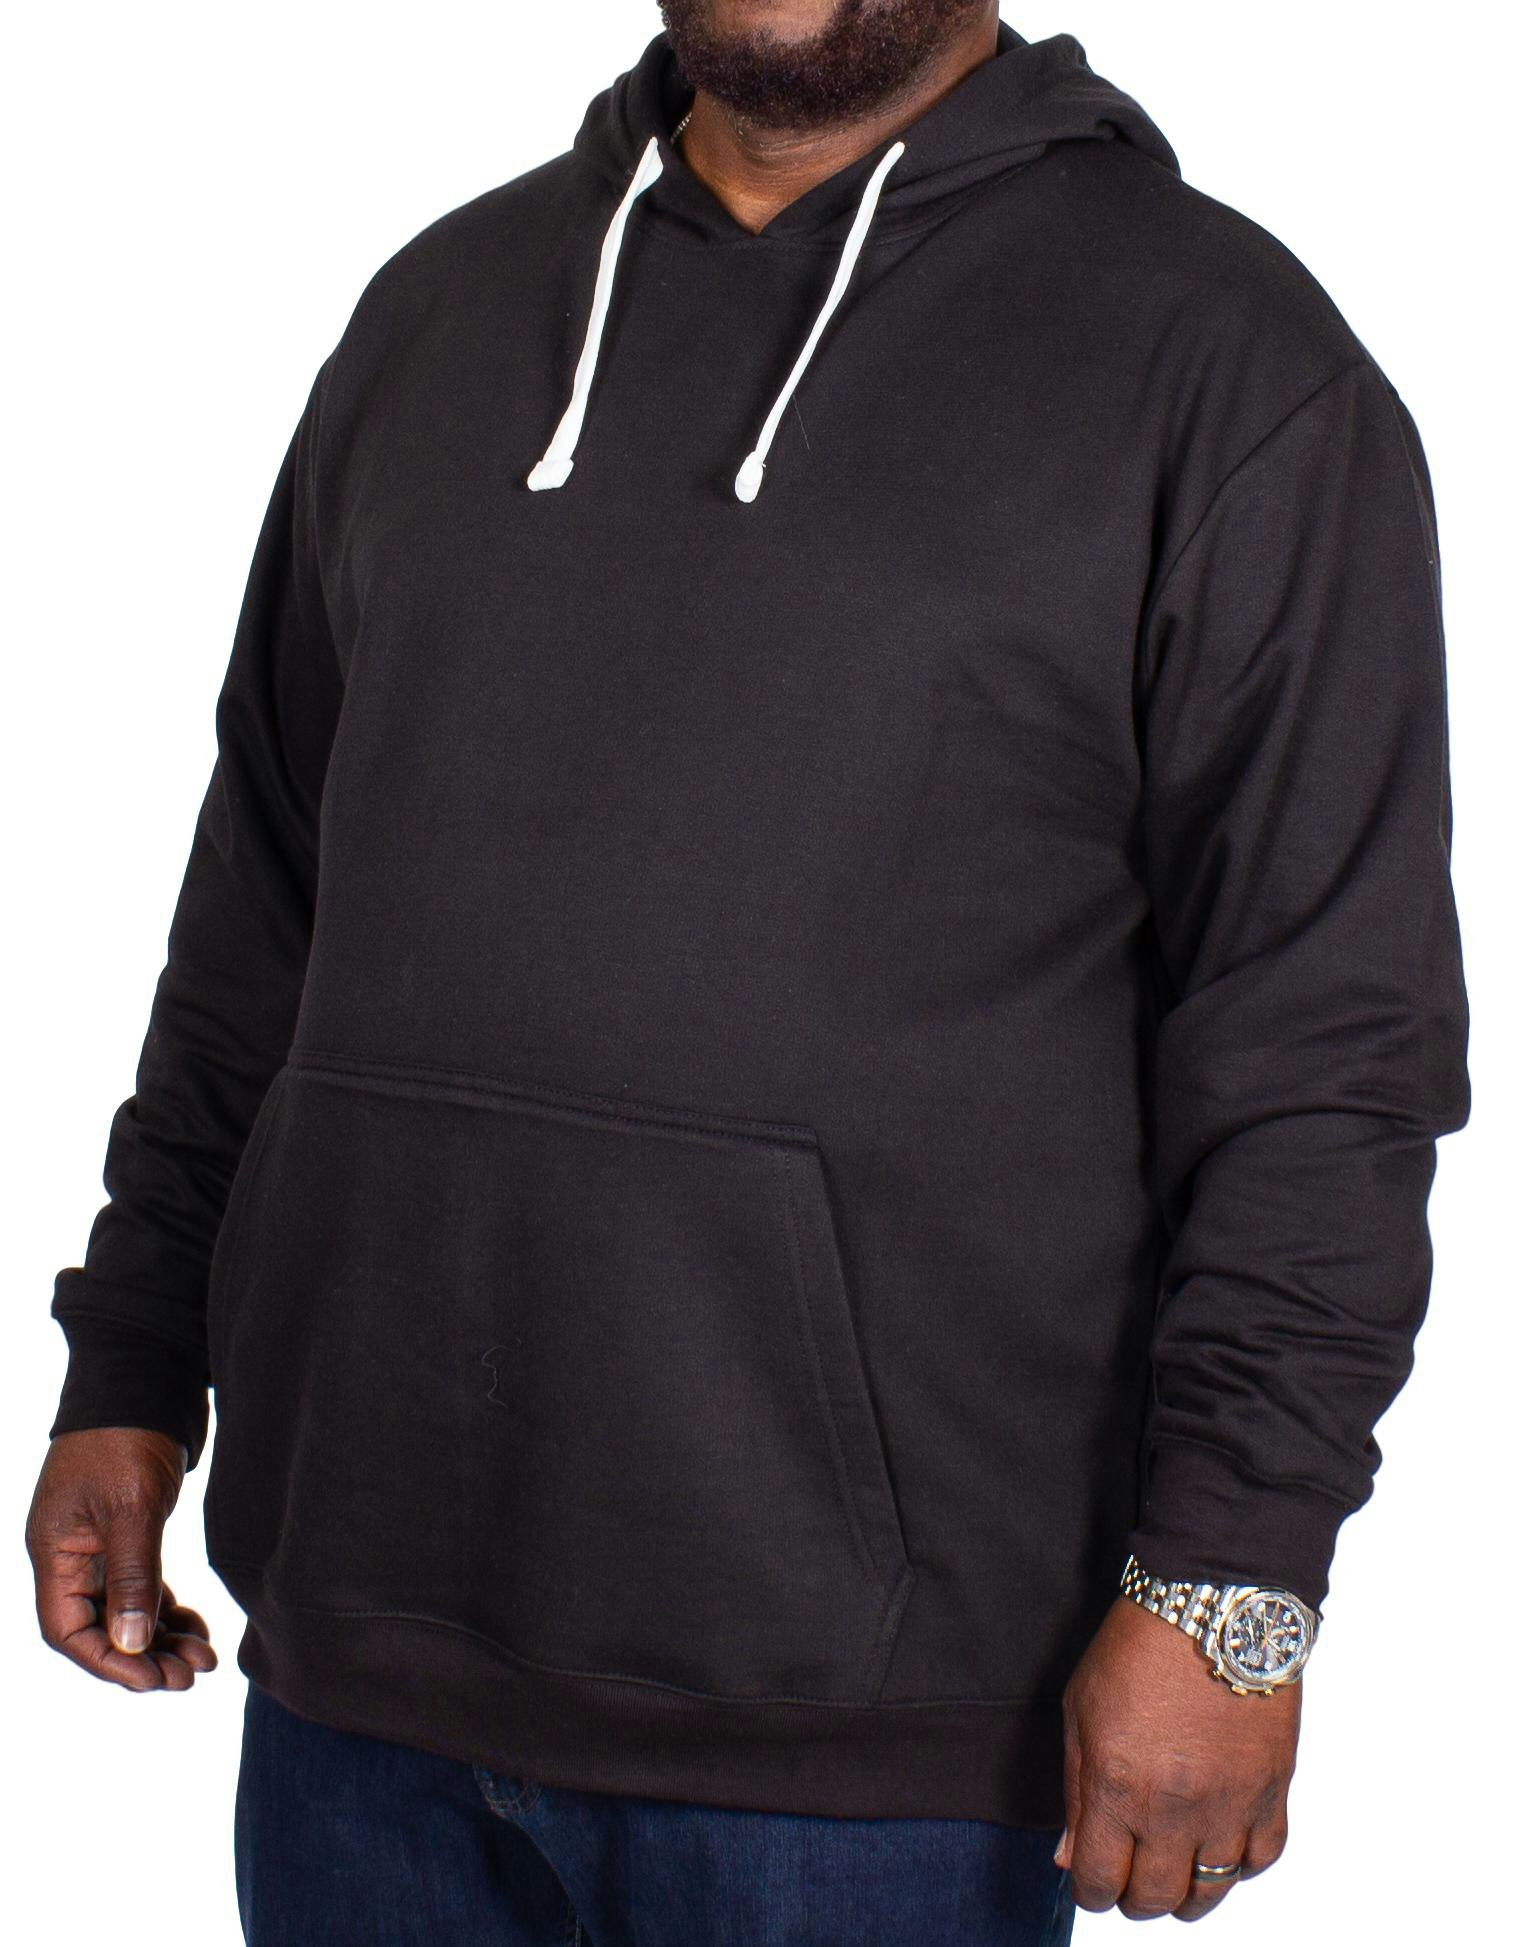 Mens Plain Sweatshirt Jersey Jumper Sweater Pullover Work Casual Plus Size Top S-5XL